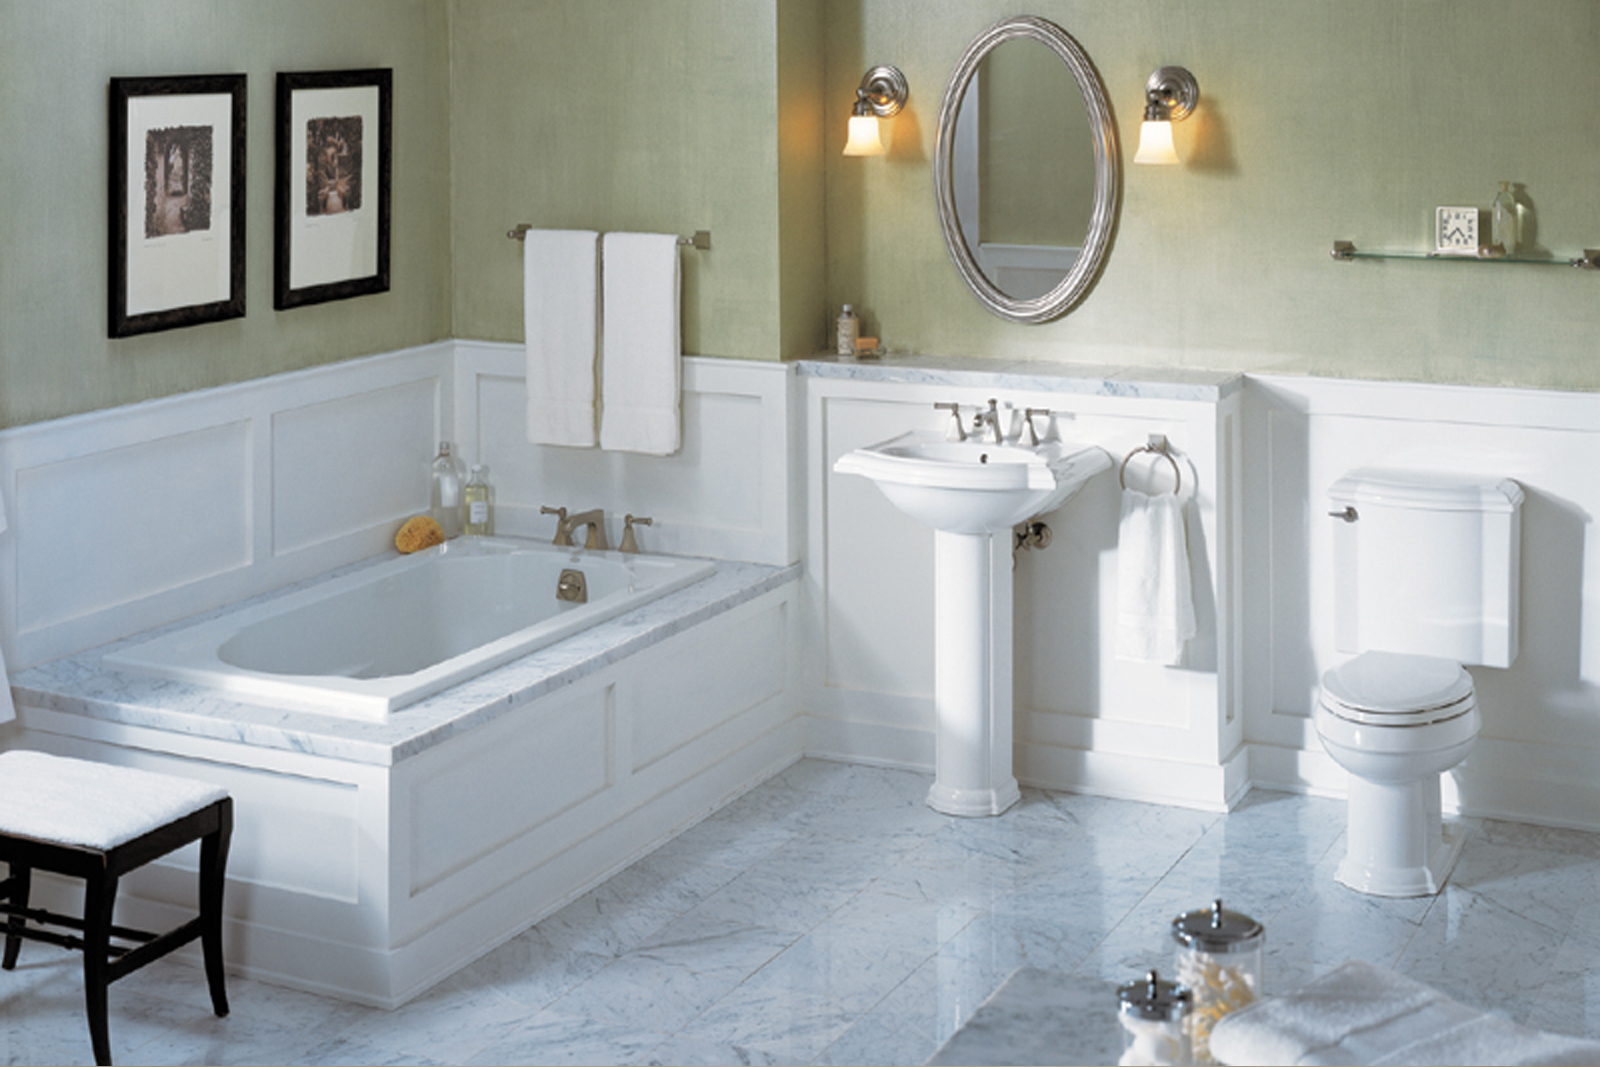 30+ Inexpensive Bathroom Renovation Ideas - Interior Design Inspirations